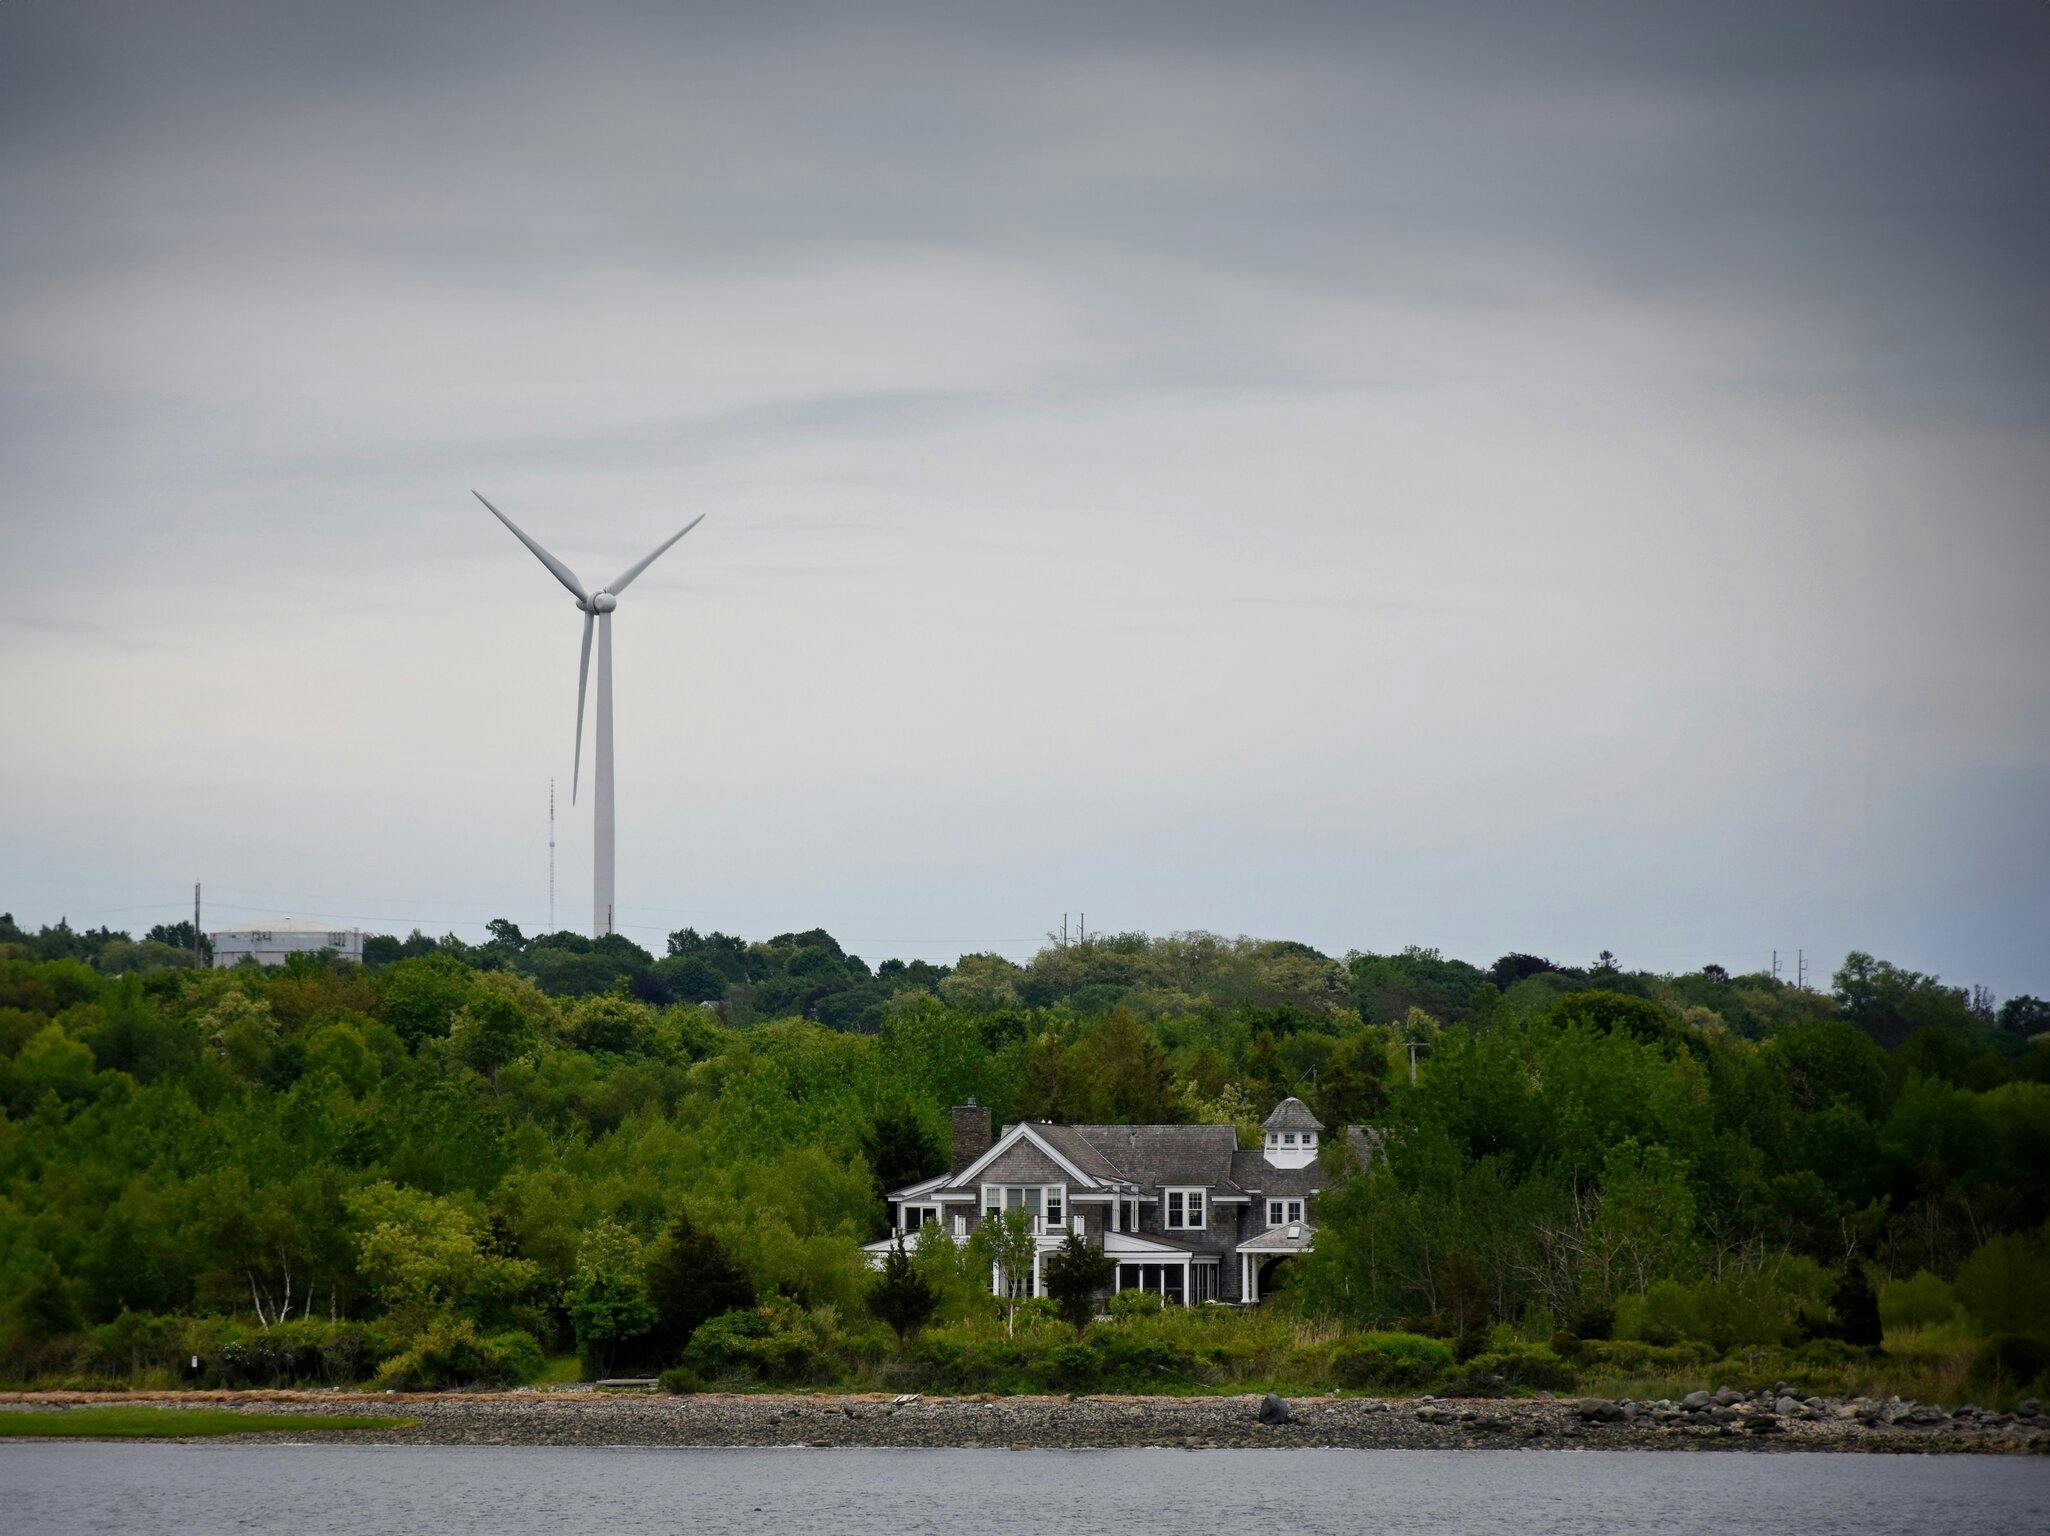 Onshore wind farm in coastal community